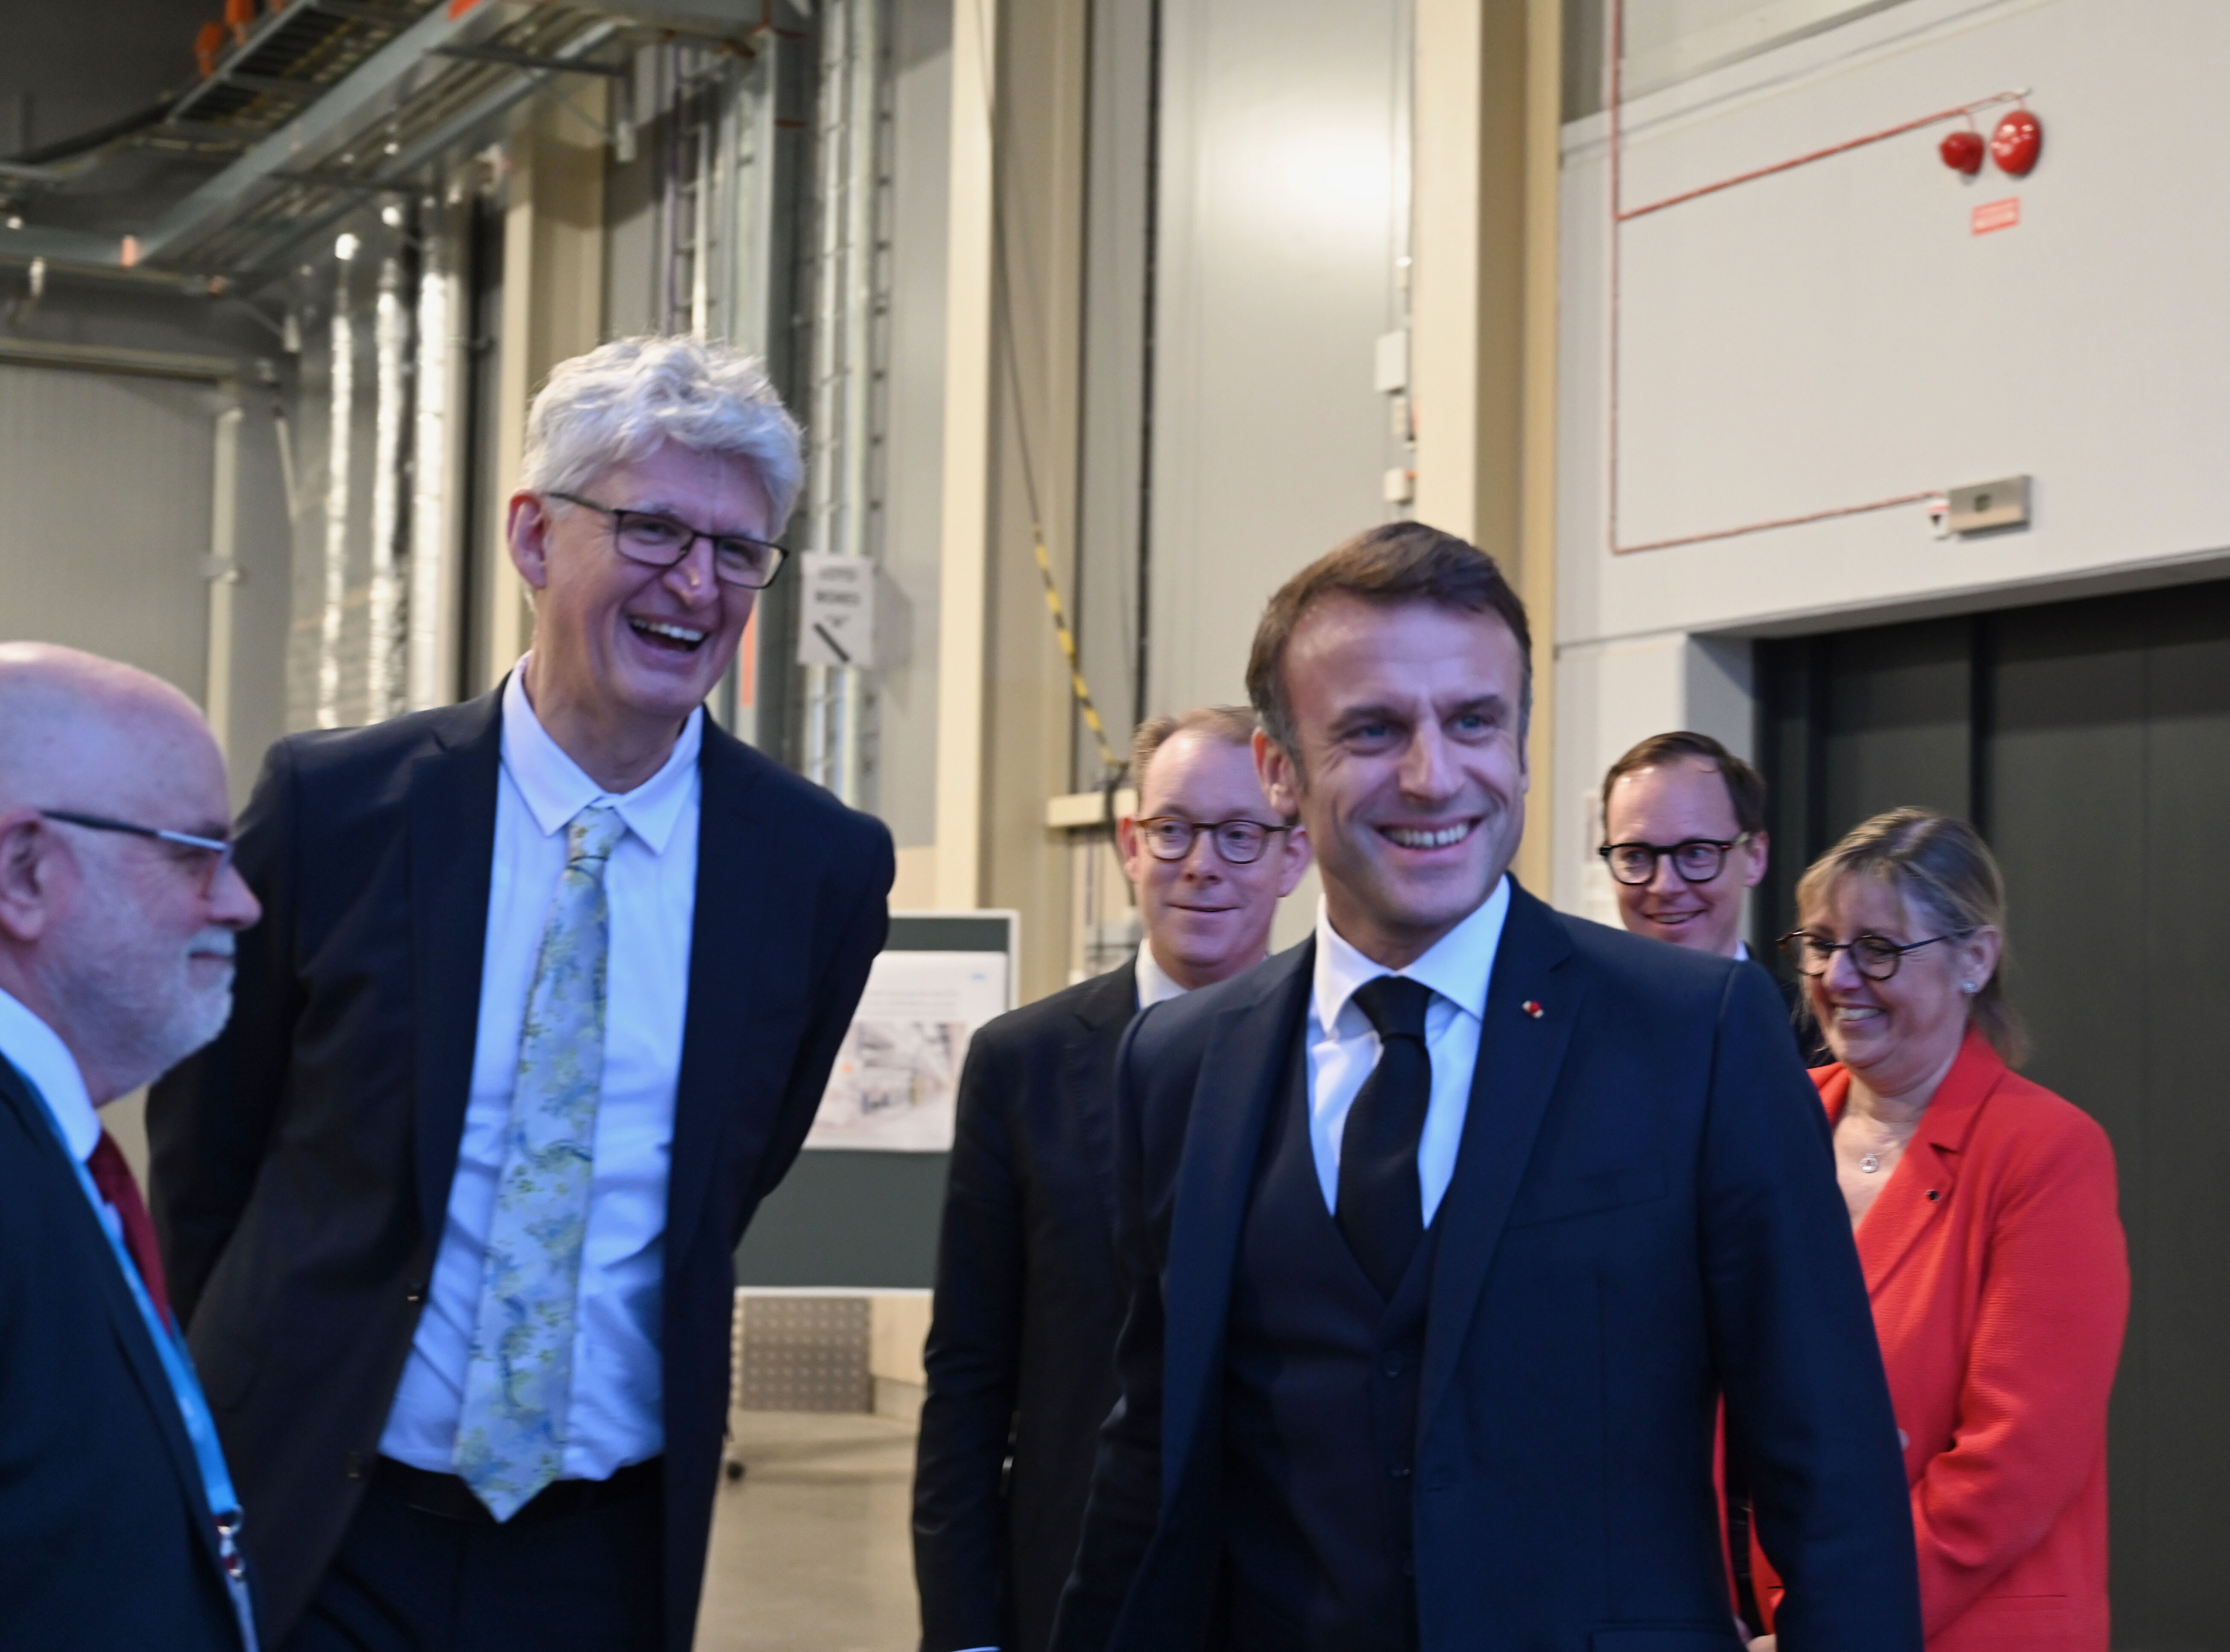 Helmut Schober smiles next to a smiling President Macron